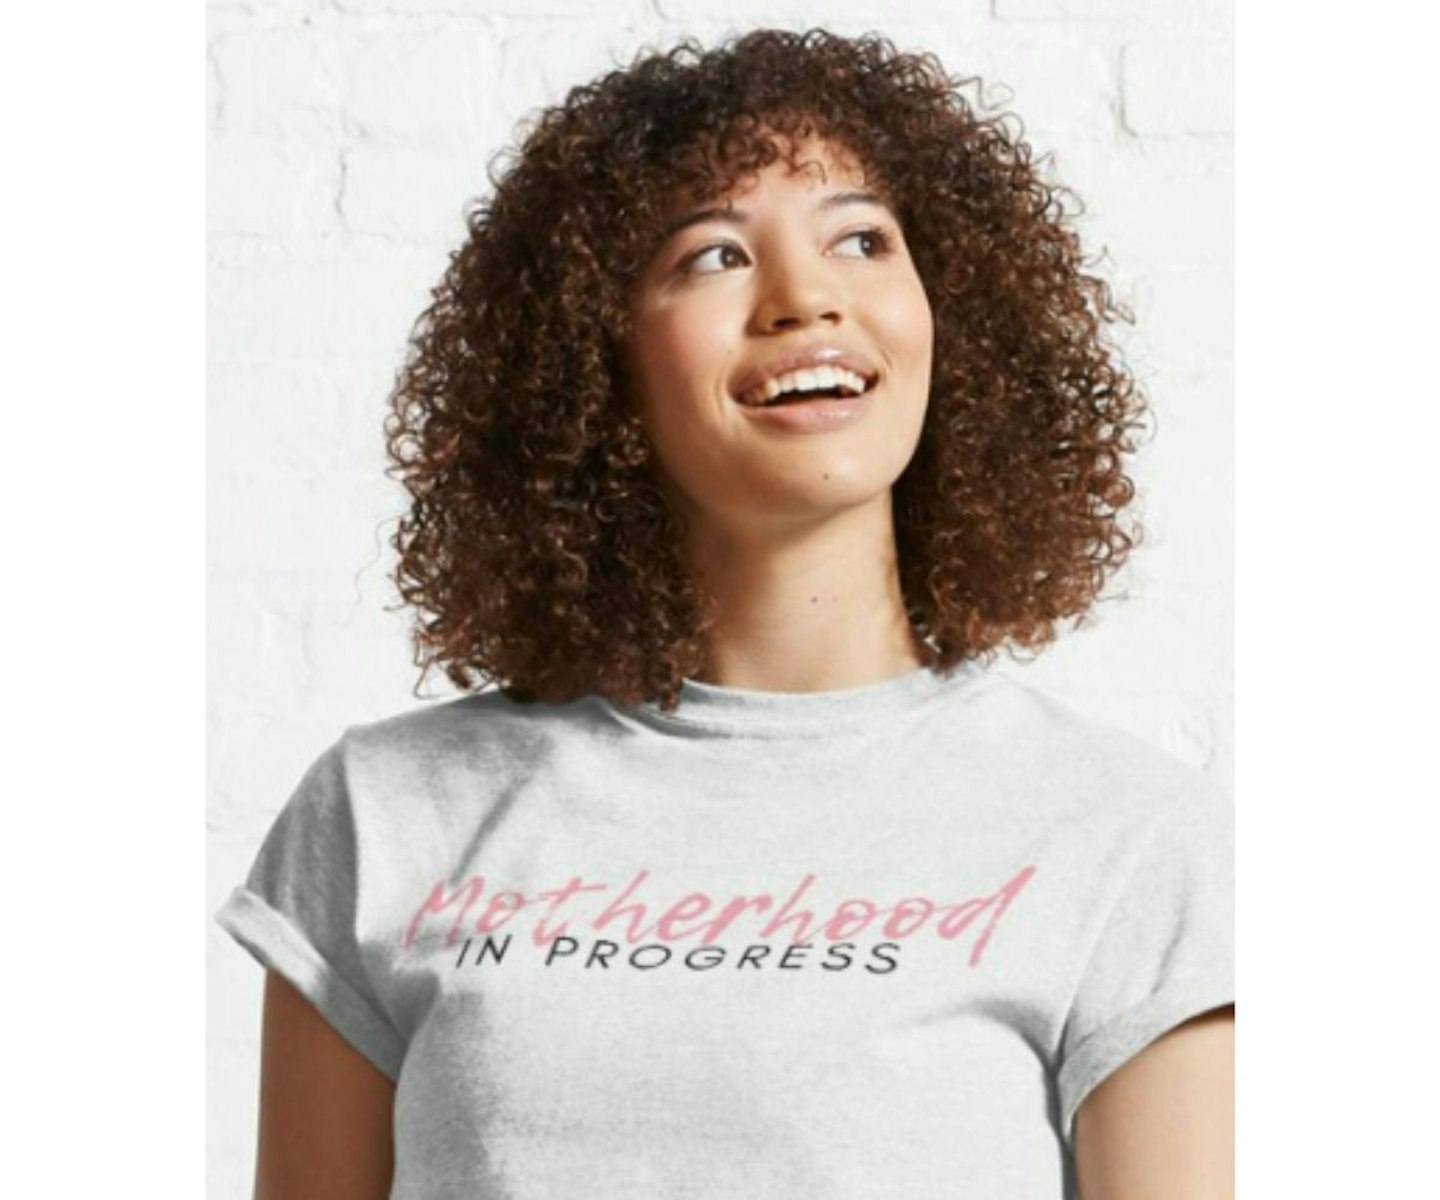 best-slogan-maternity-t-shirts